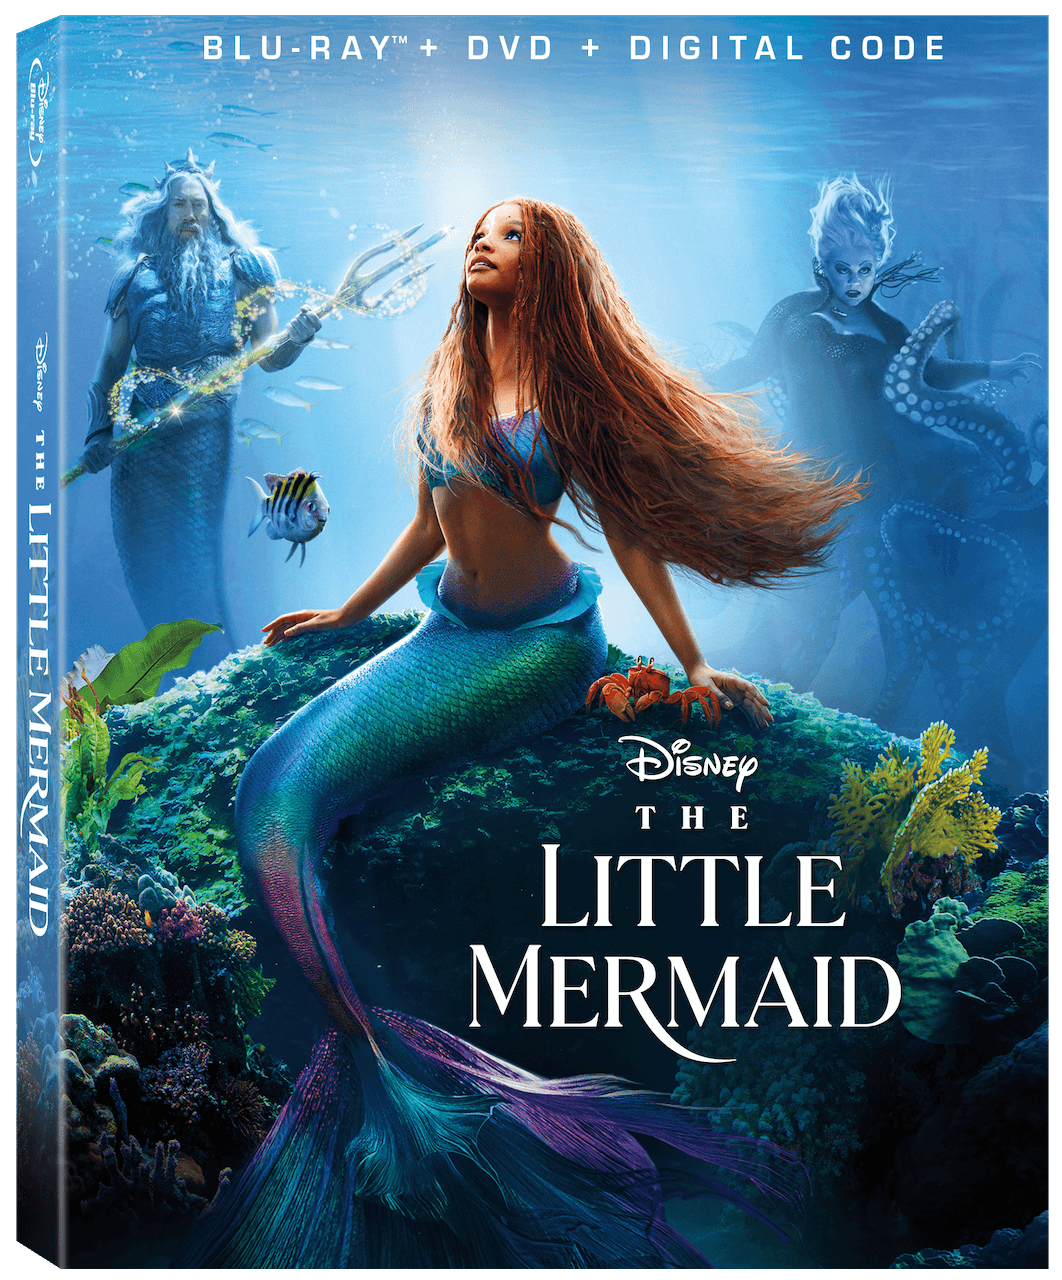 Disney’s “The Little Mermaid’ Digital & BluRay/DVD/4K Release Details